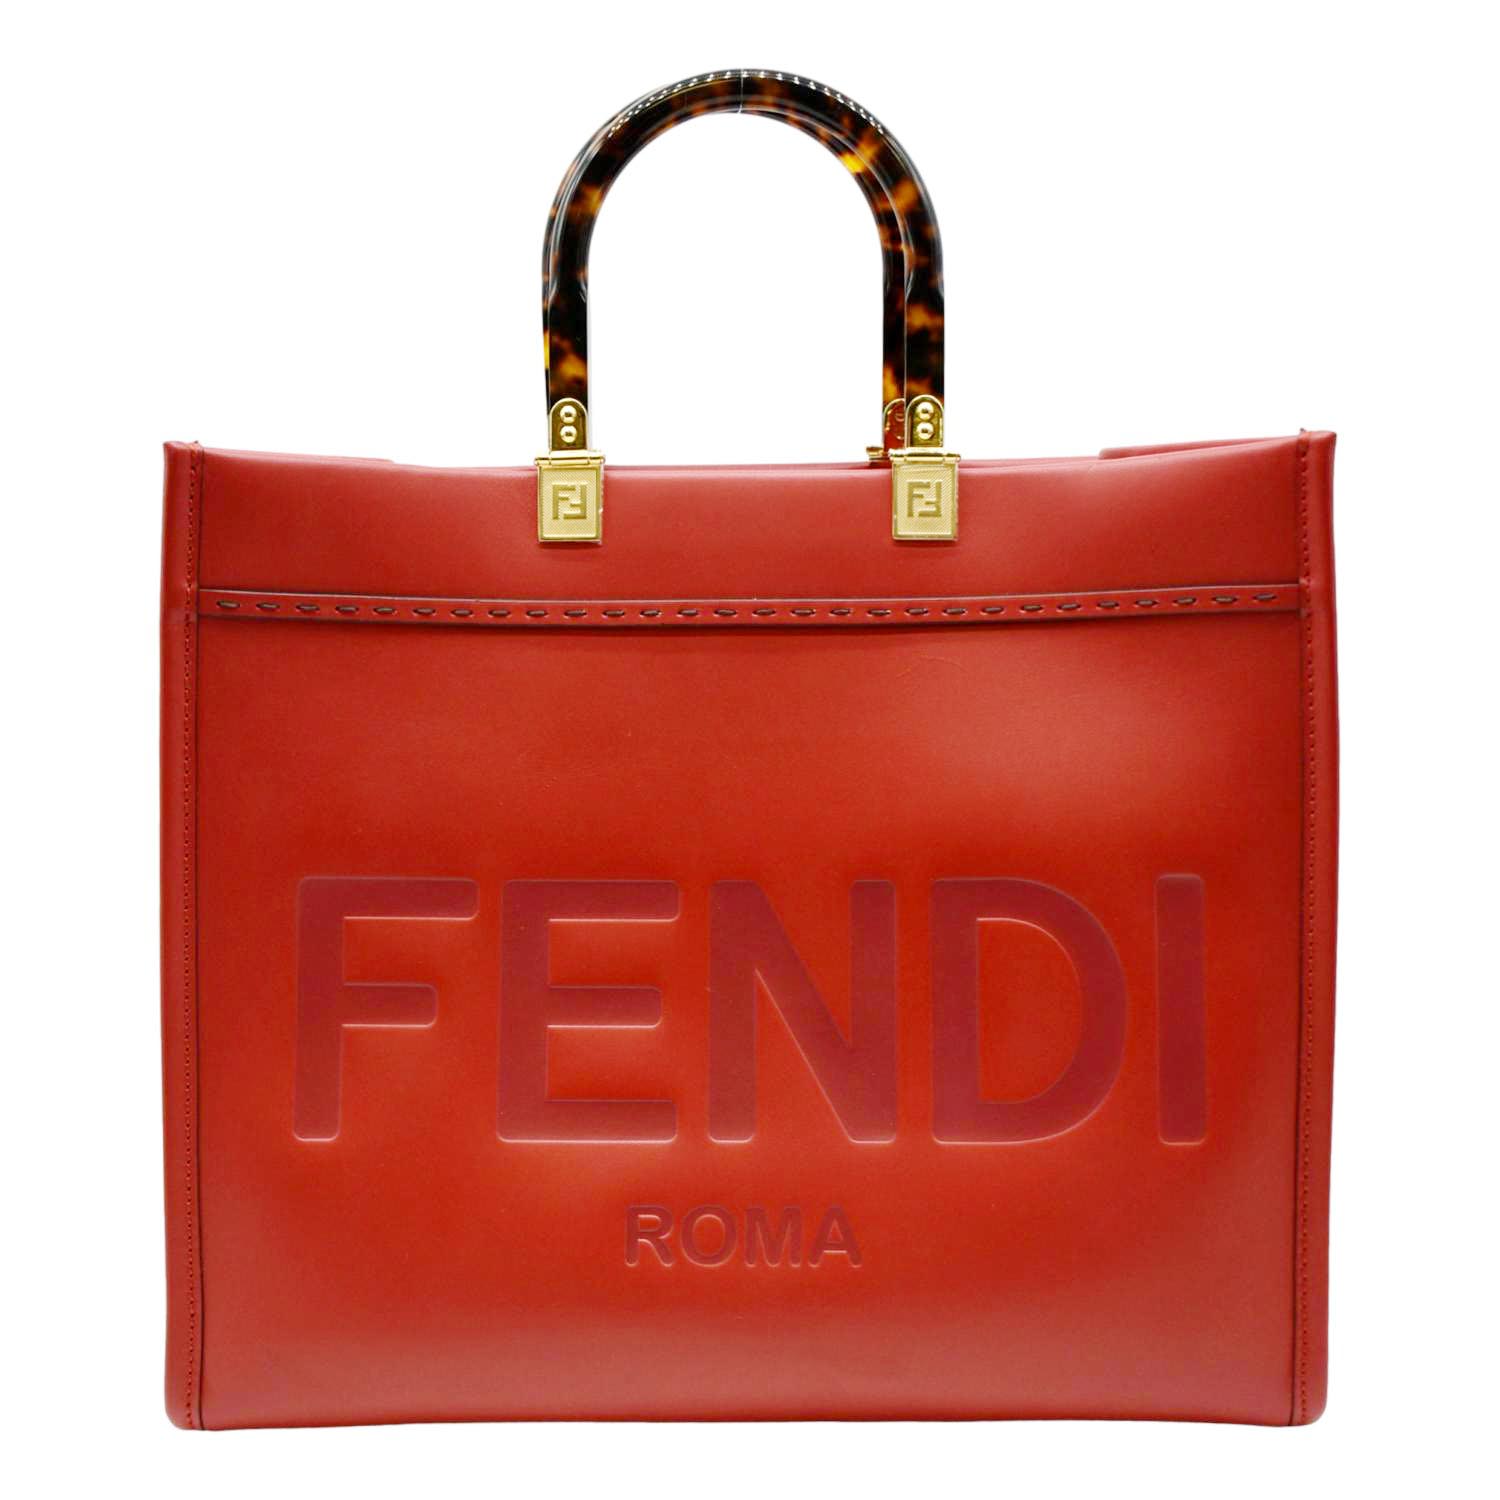 Fendi Red Sequin Shoulder Bag QBB0592MRB000 | WGACA